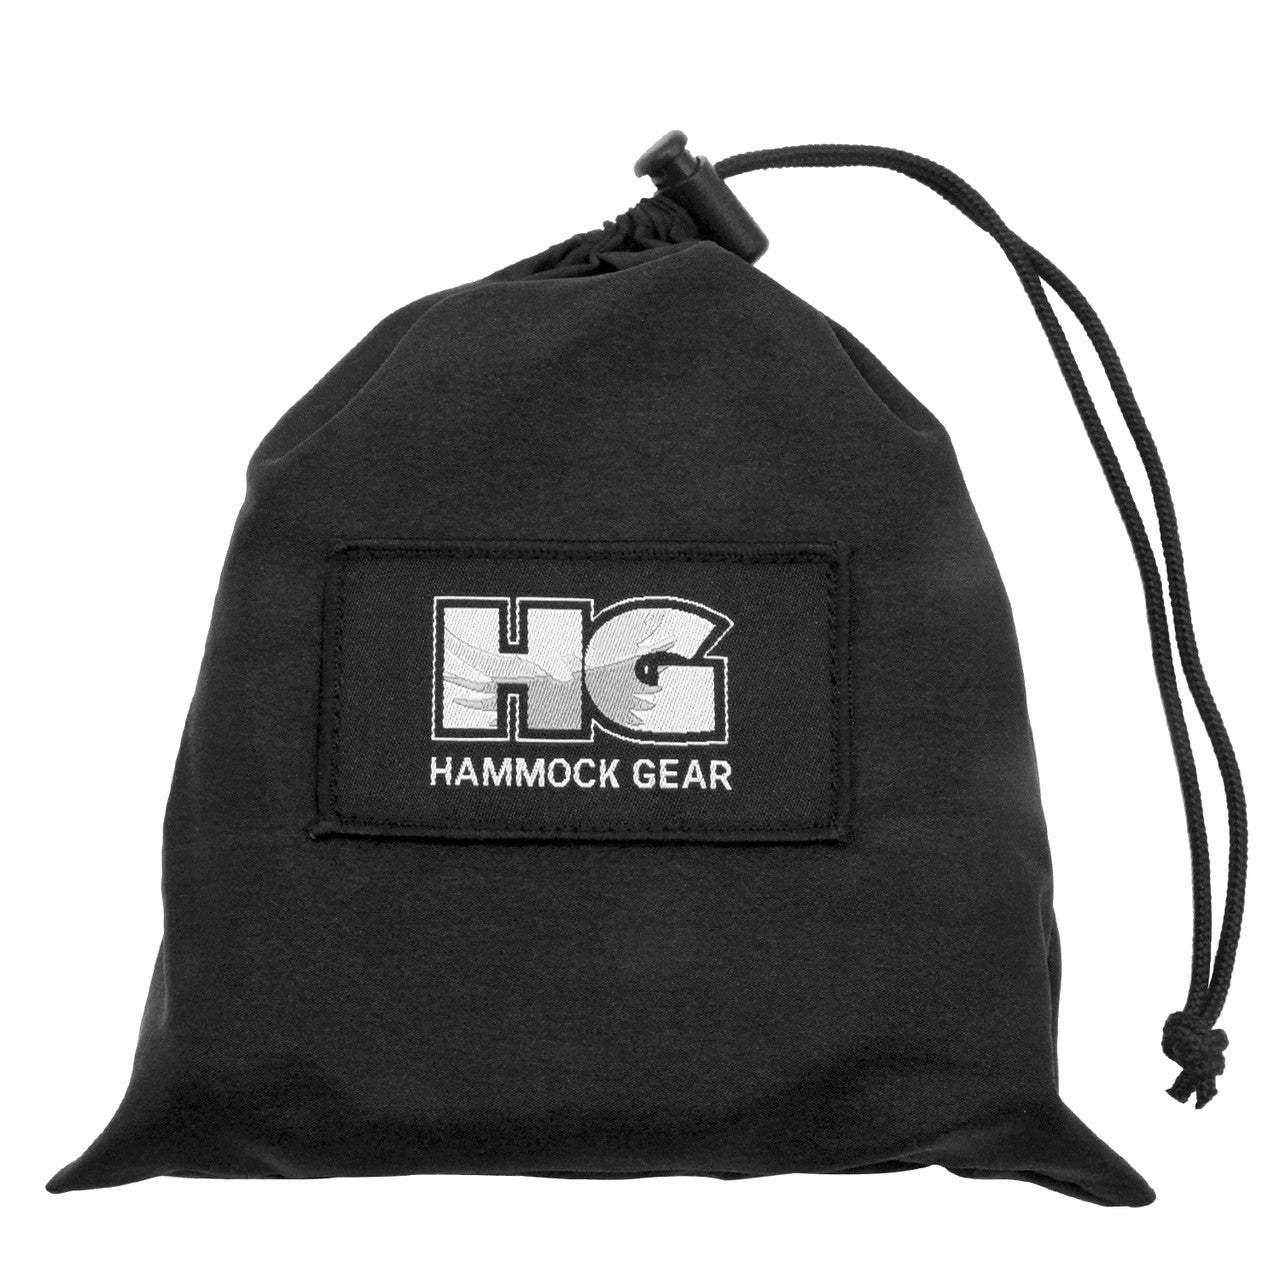 Hammock Gear -  Daisy Chain Tree Straps (Pair)